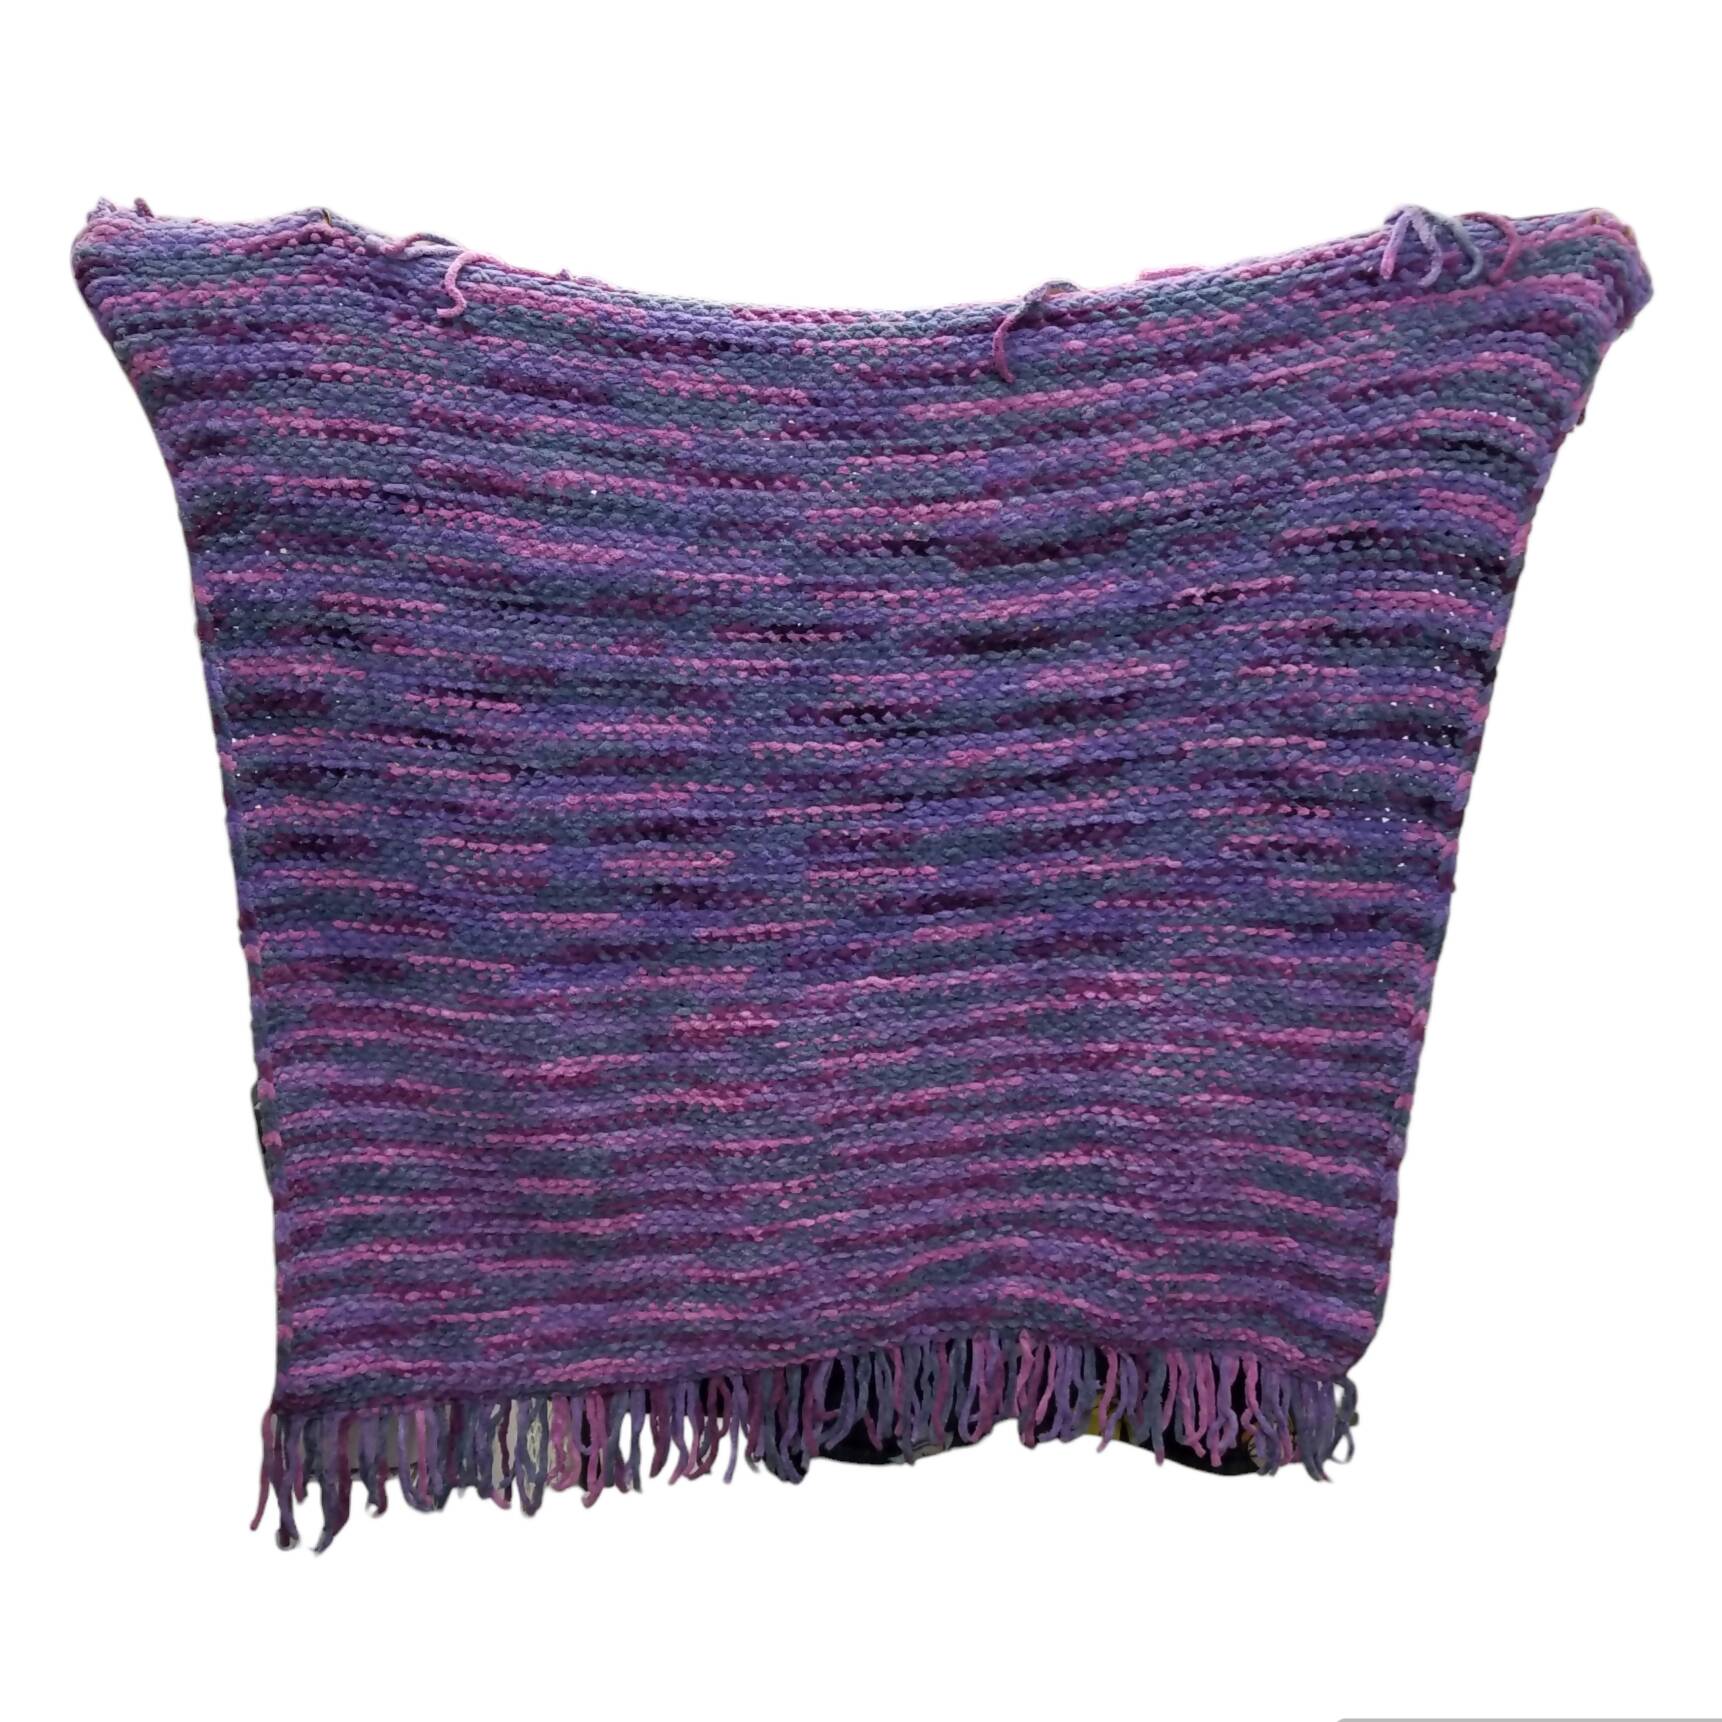 Purple fringe baby blanket